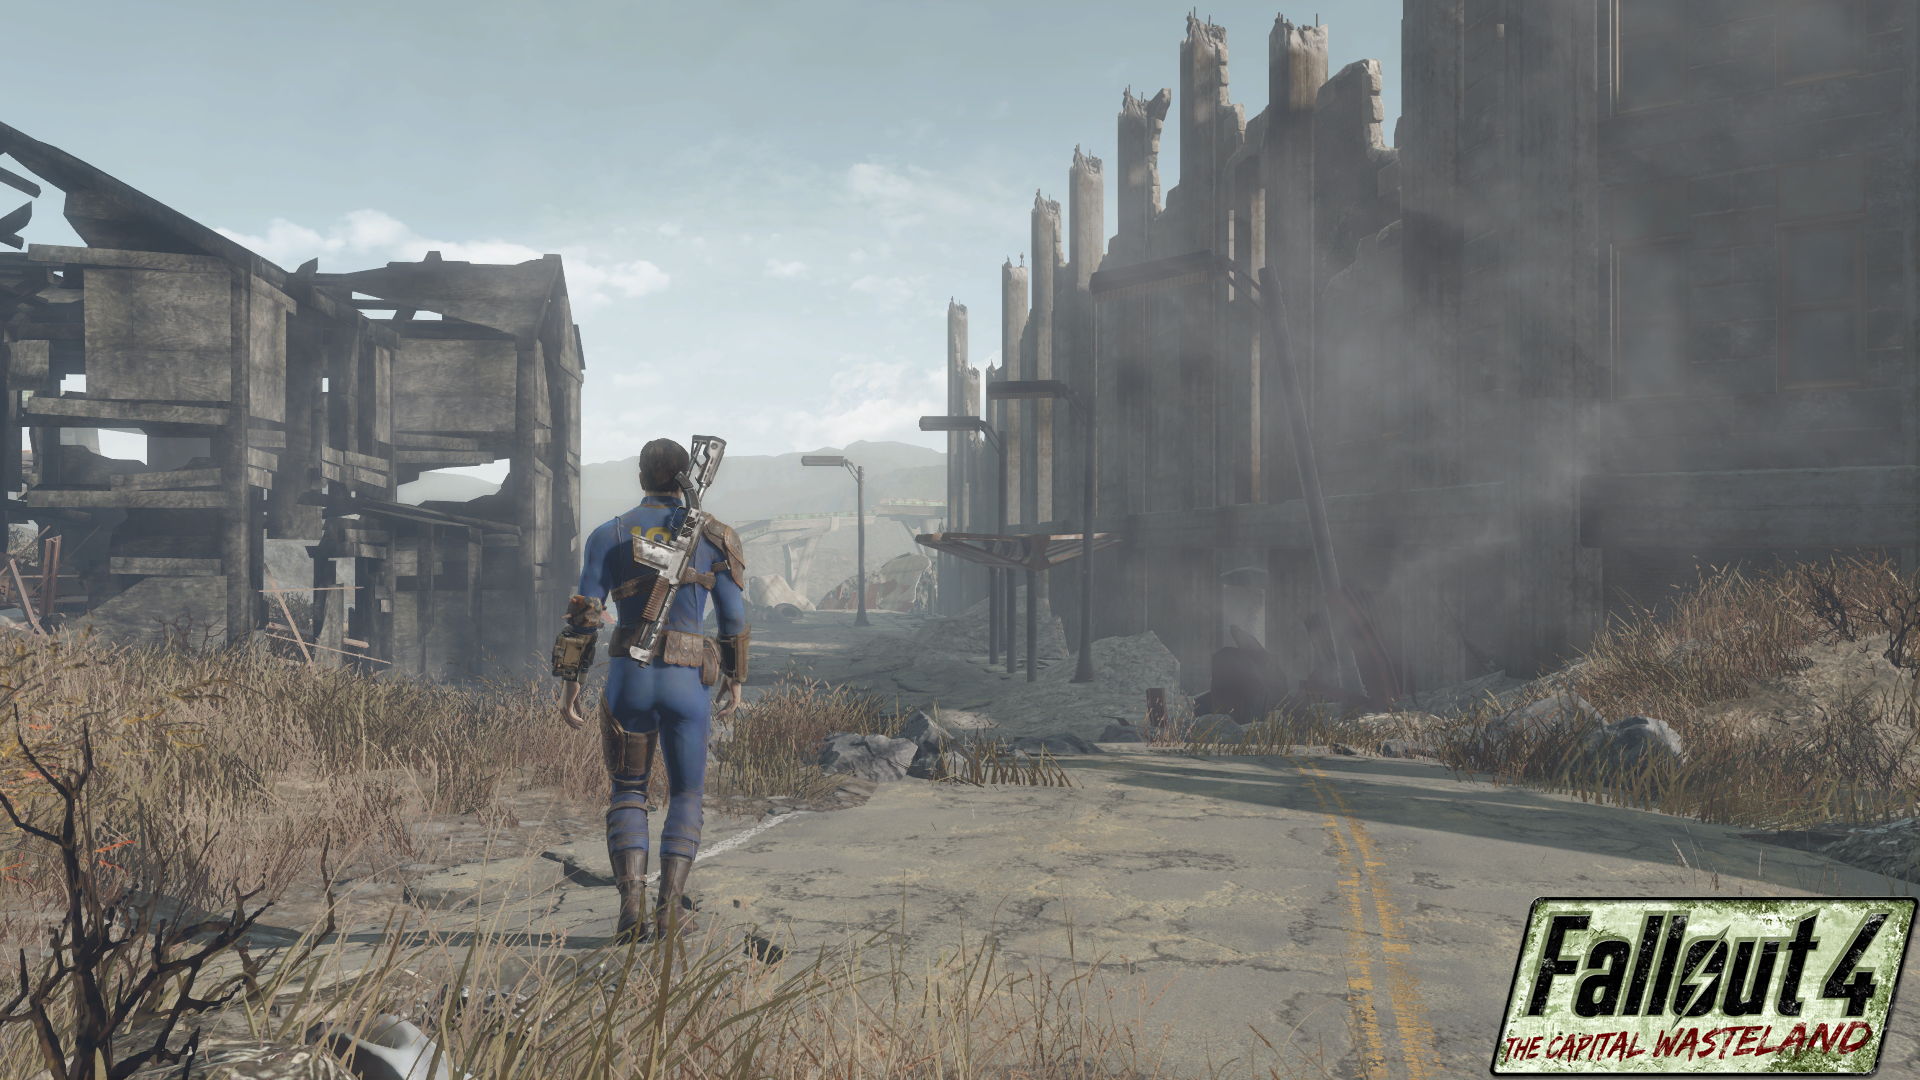 В каком году происходит фоллаут 4. Ремейк Fallout 3. Фоллаут 4. Фоллаут 4 Столичная Пустошь. Fallout 3 Capital Wasteland.